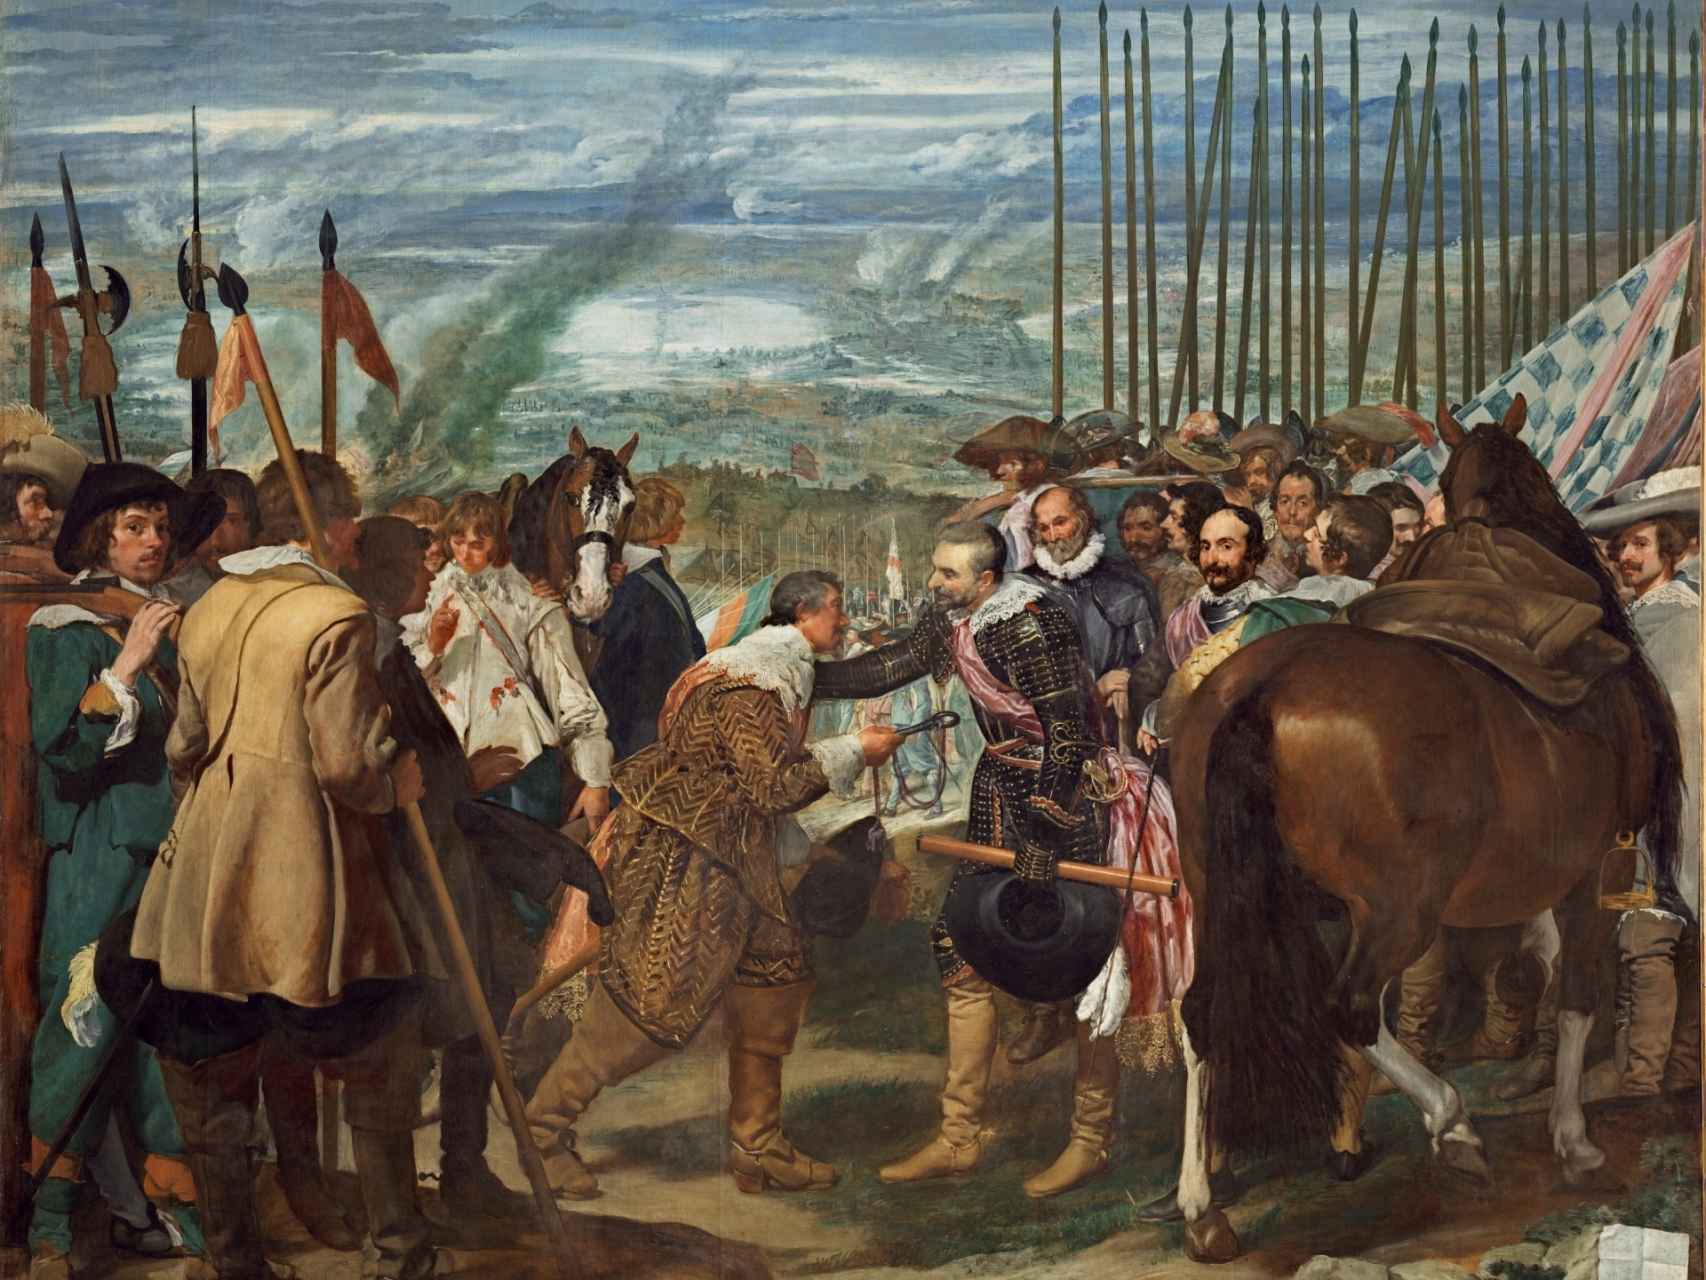 Museo_del_Prado-Obras_de_arte-Arte-Pintura-Francisco_de_Goya-Diego_Velazquez-Arte_354976337_106791799_1706x1280.jpg